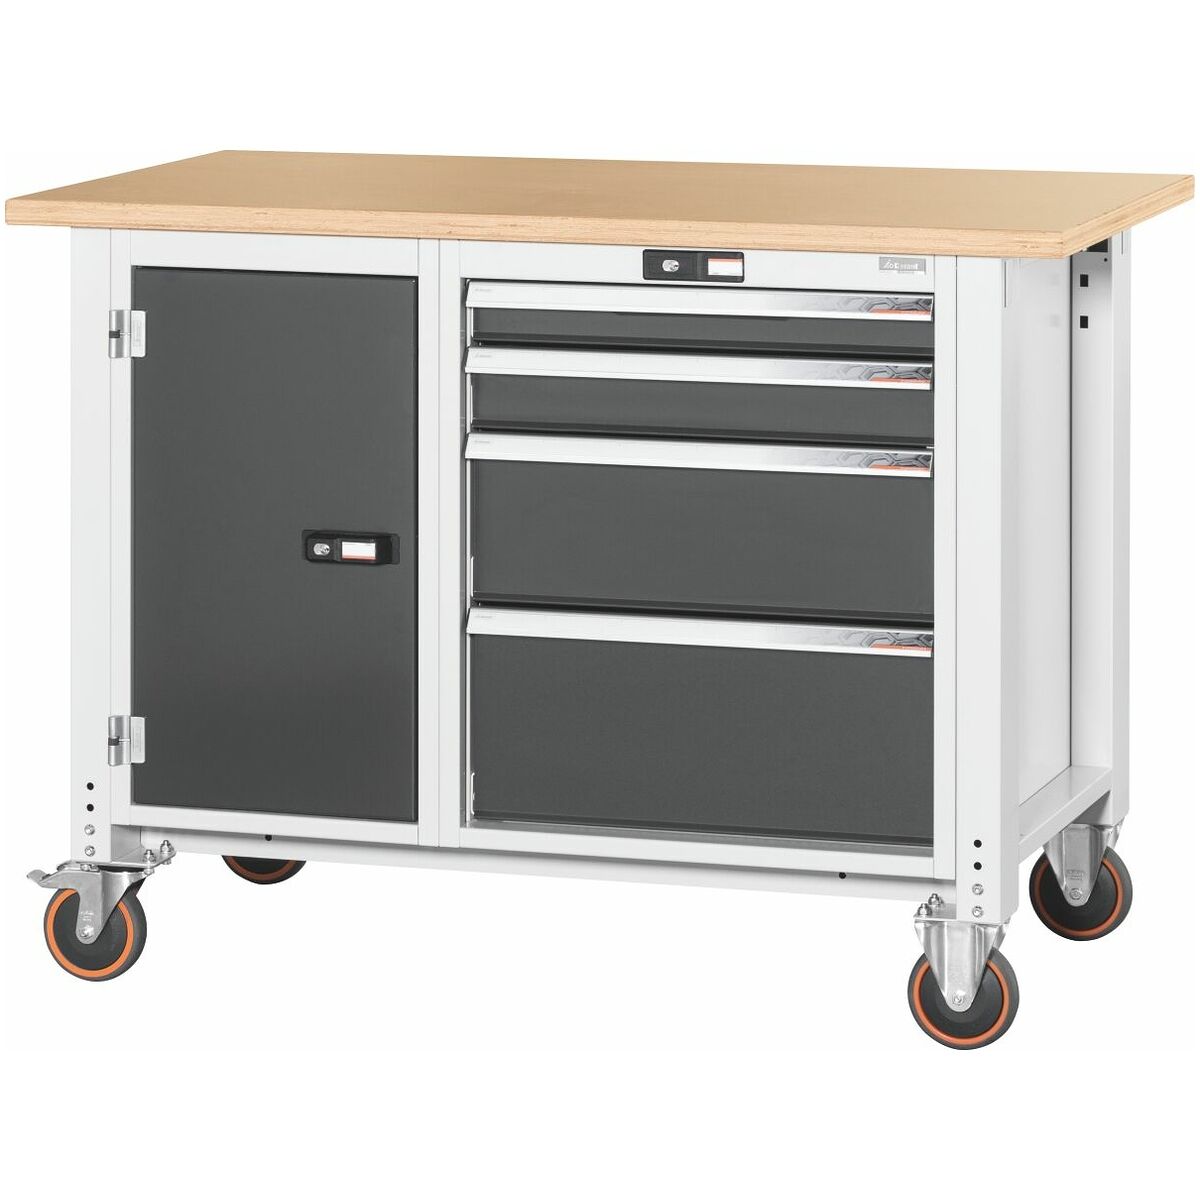 Workbench, mobile, left side cupboard, right side 4 drawers, Beech marine ply worktop 1250 mm